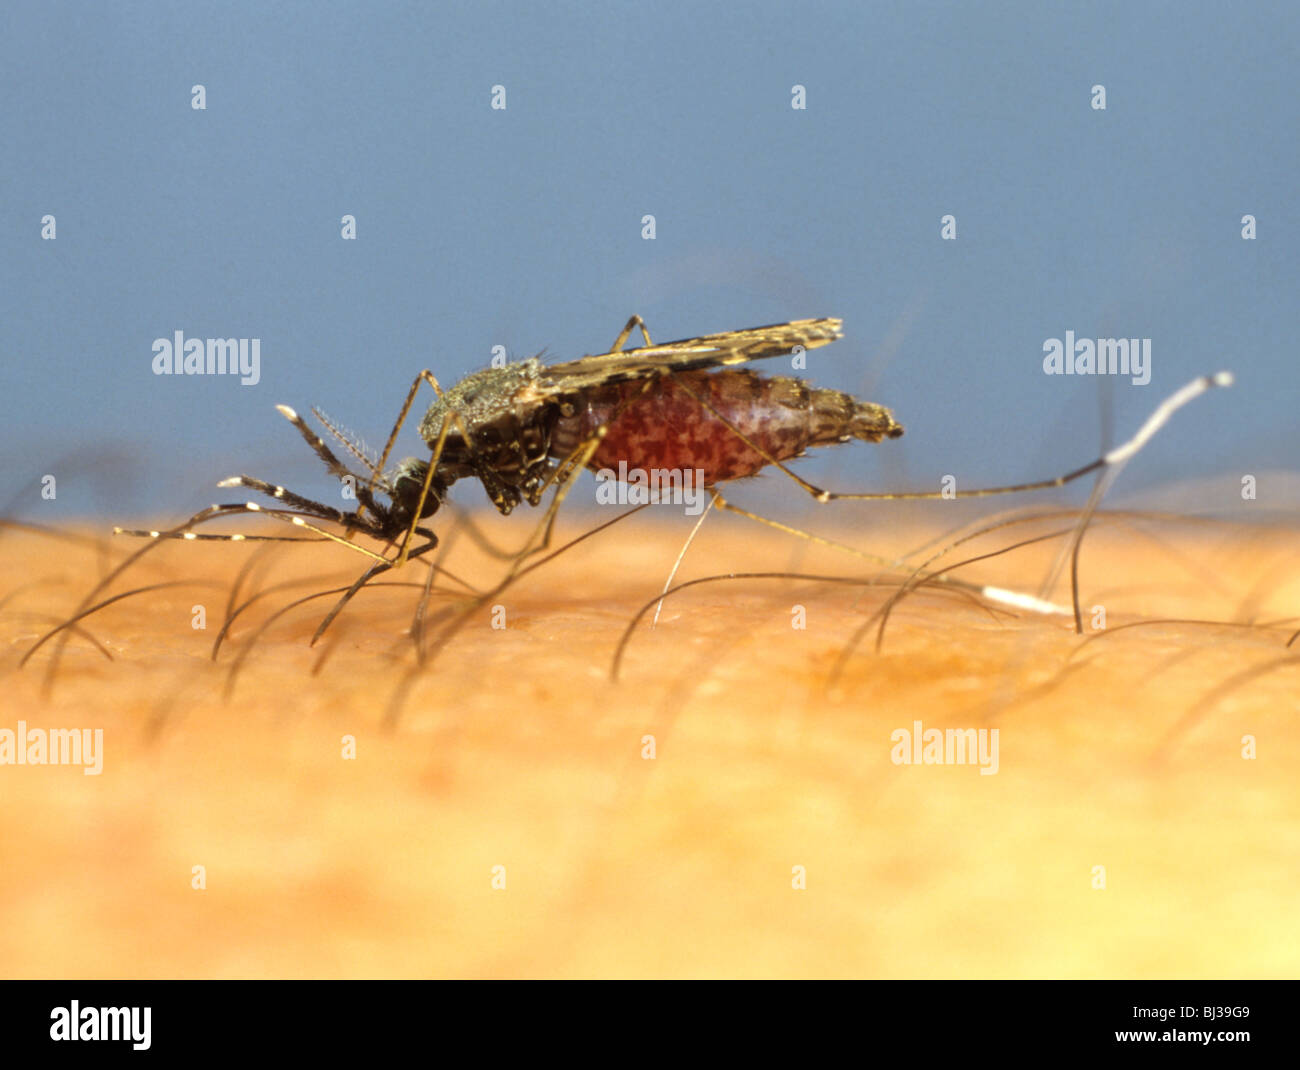 América del Sur (mosquito vector de la malaria Anopheles albimanus) alimentándose de brazo humano Foto de stock